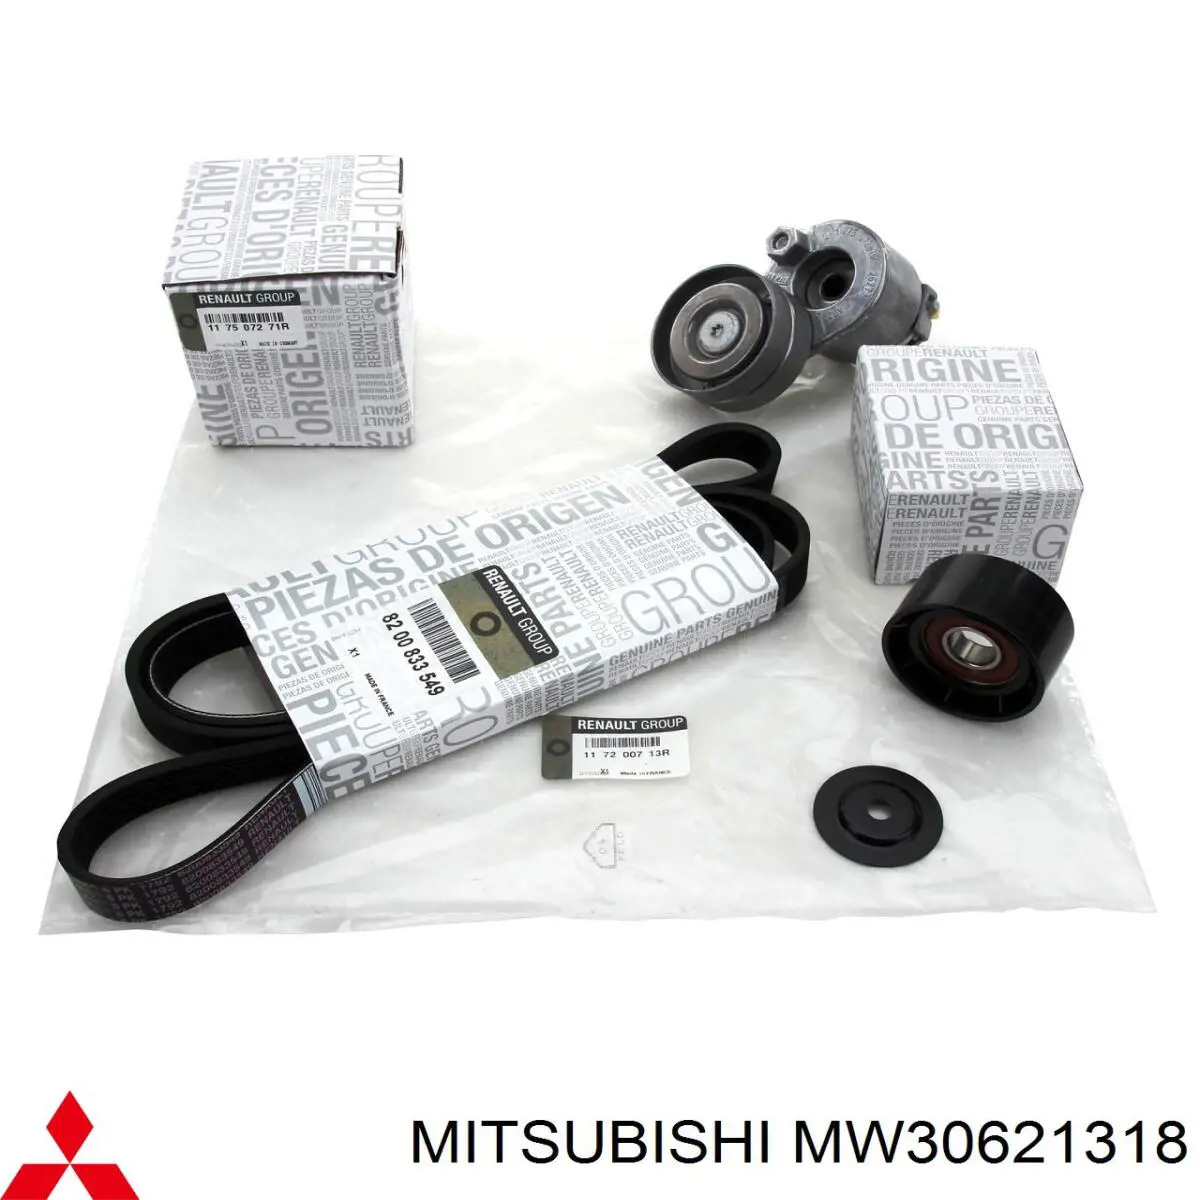 MW30621318 Mitsubishi ремень генератора